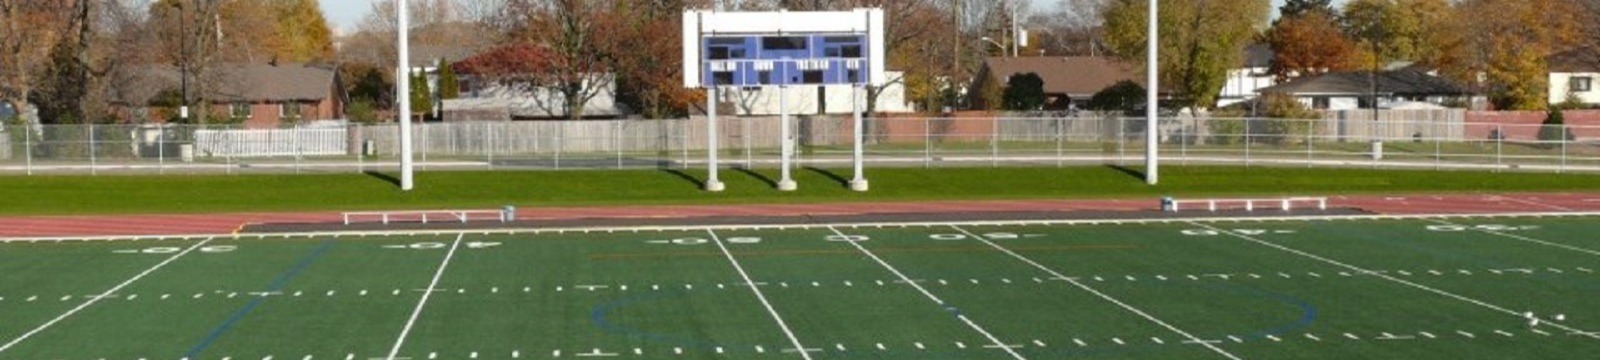 Civic Field 1 with scoreboard